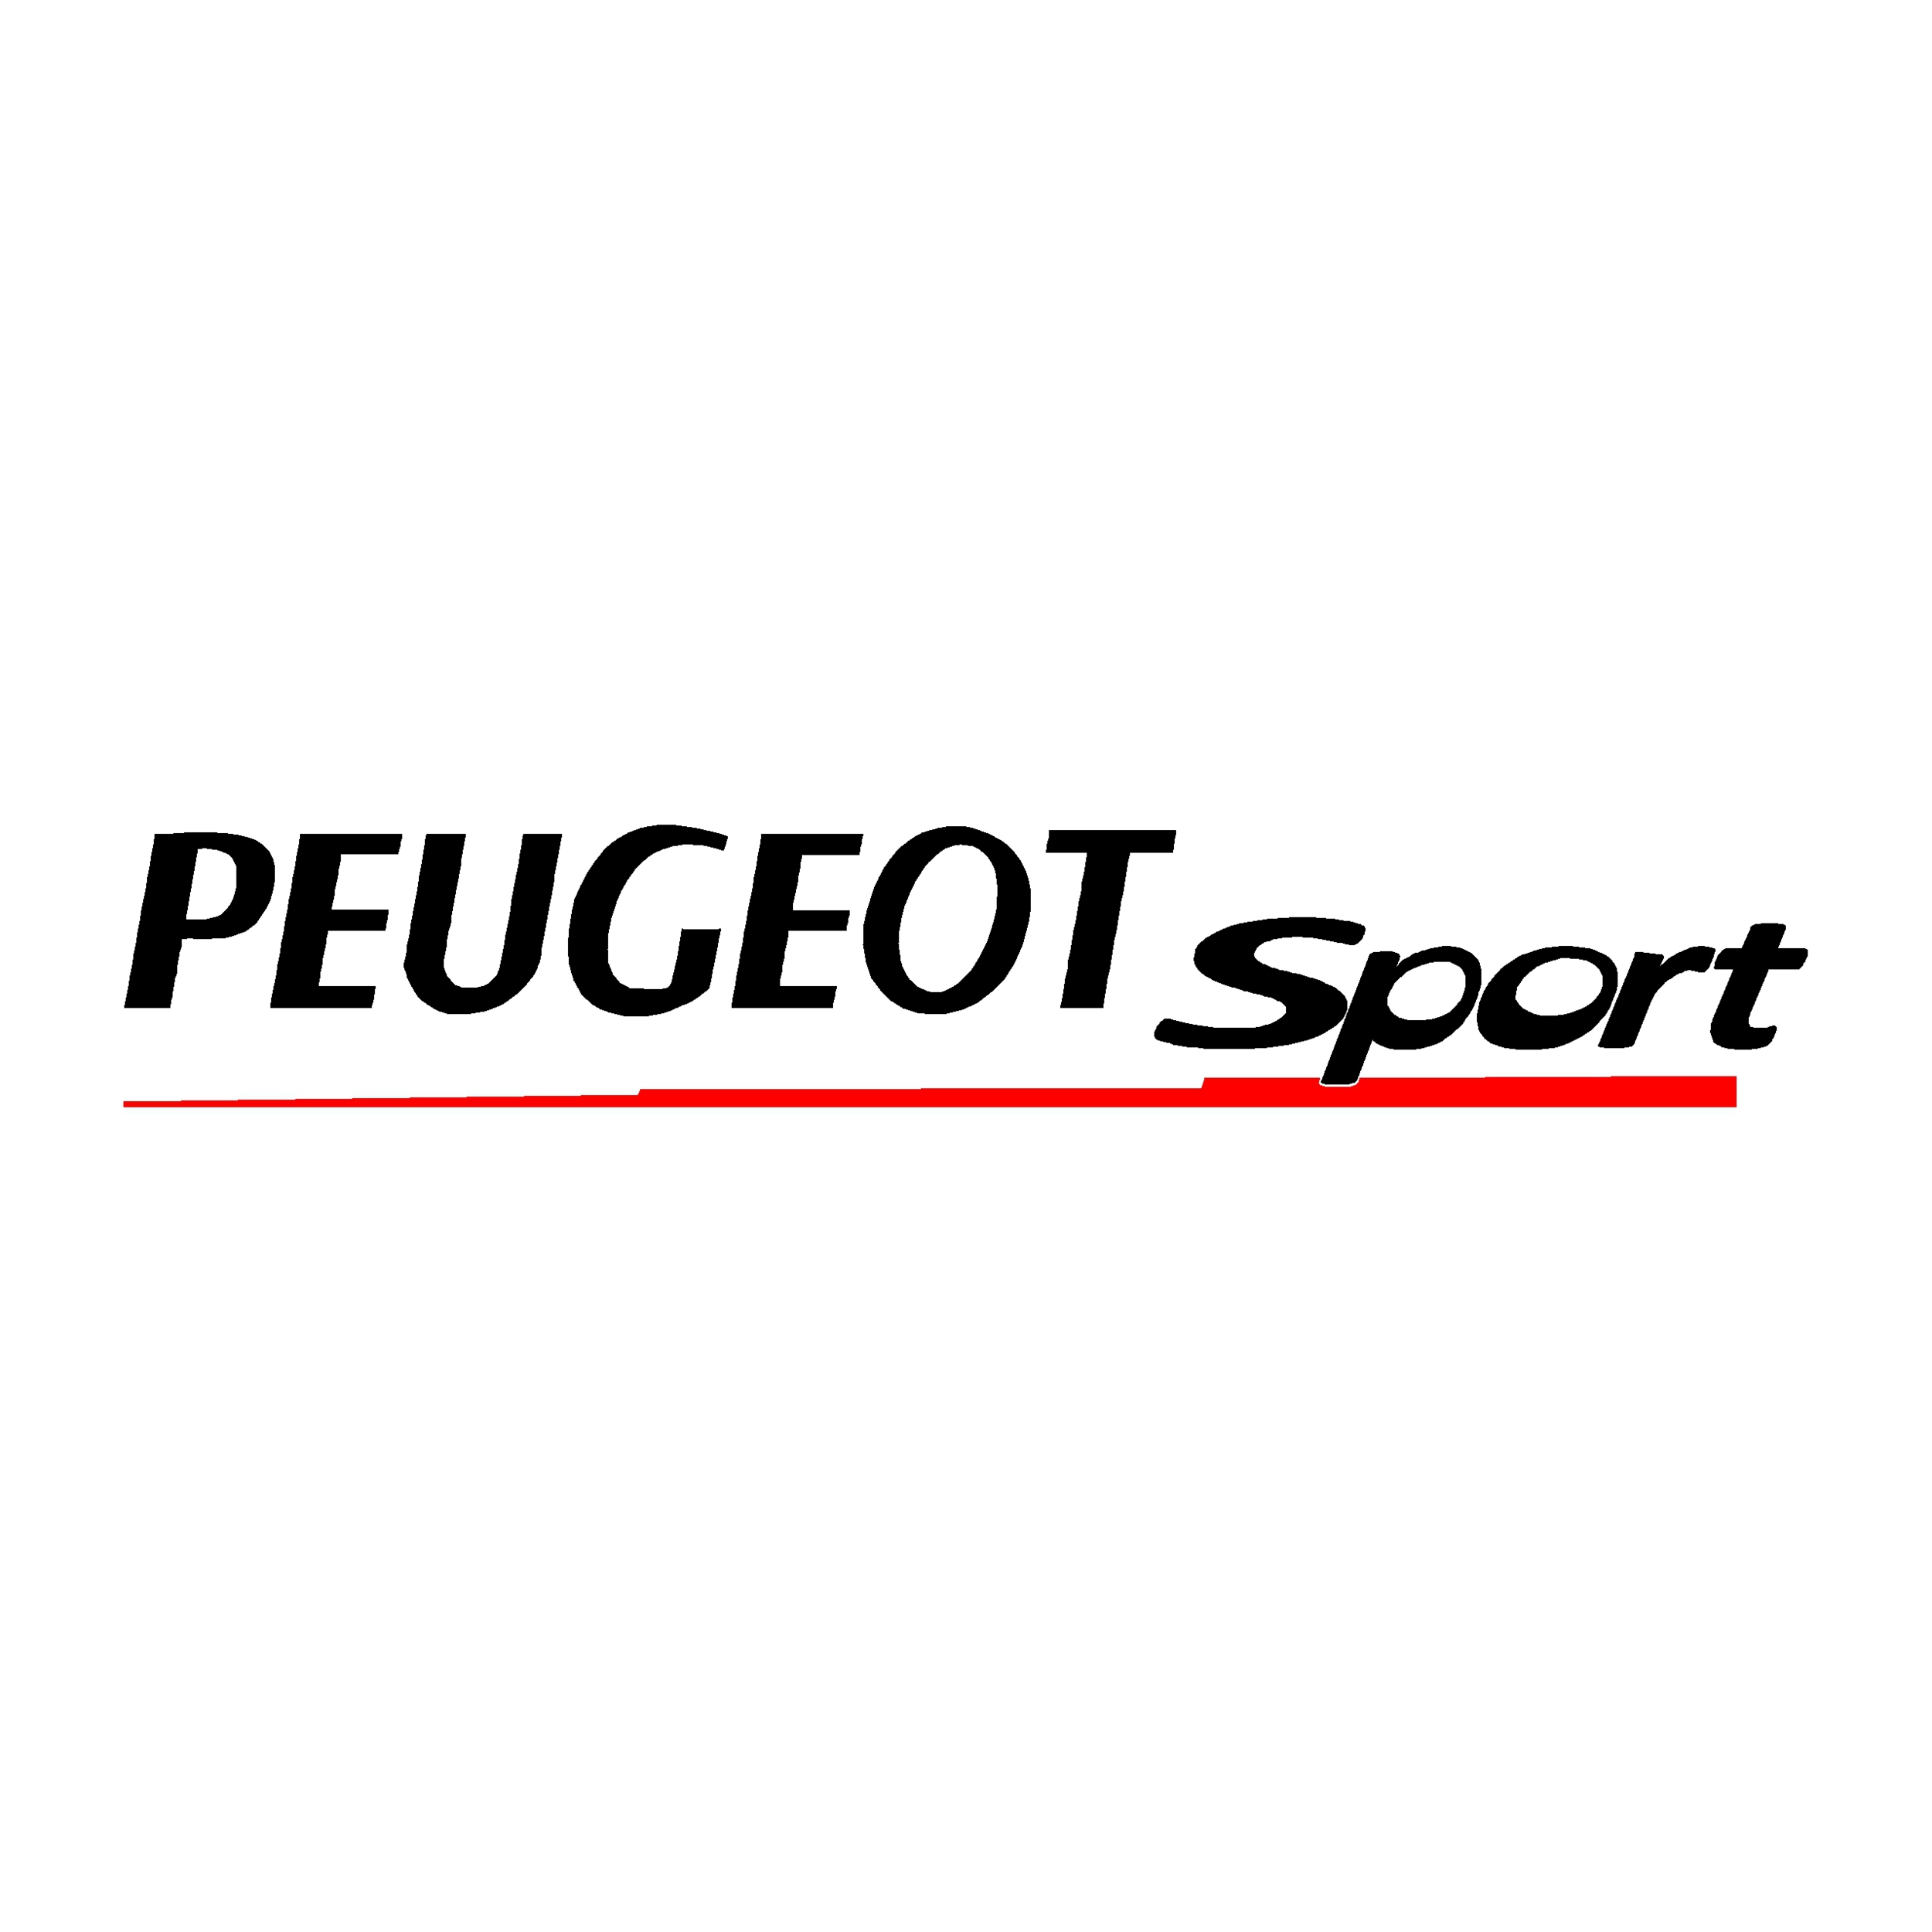 Sticker PEUGEOT sport ref 35 - VOITURE/PEUGEOT - automotostick